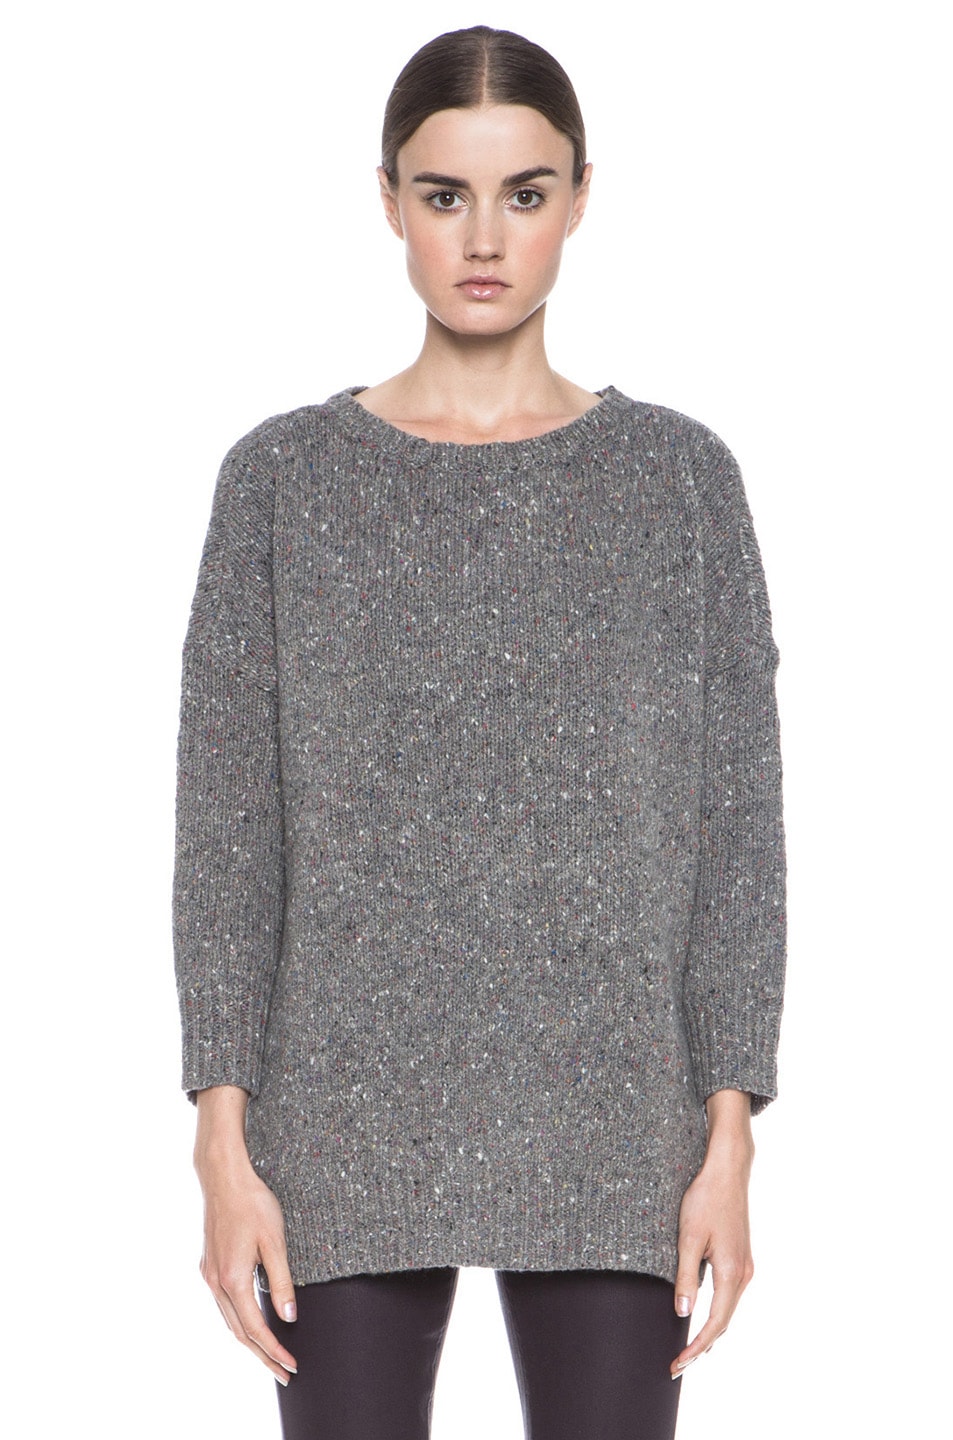 Inhabit Donegal Outdoor Wool-Blend Sweater in Mid-Grey | FWRD